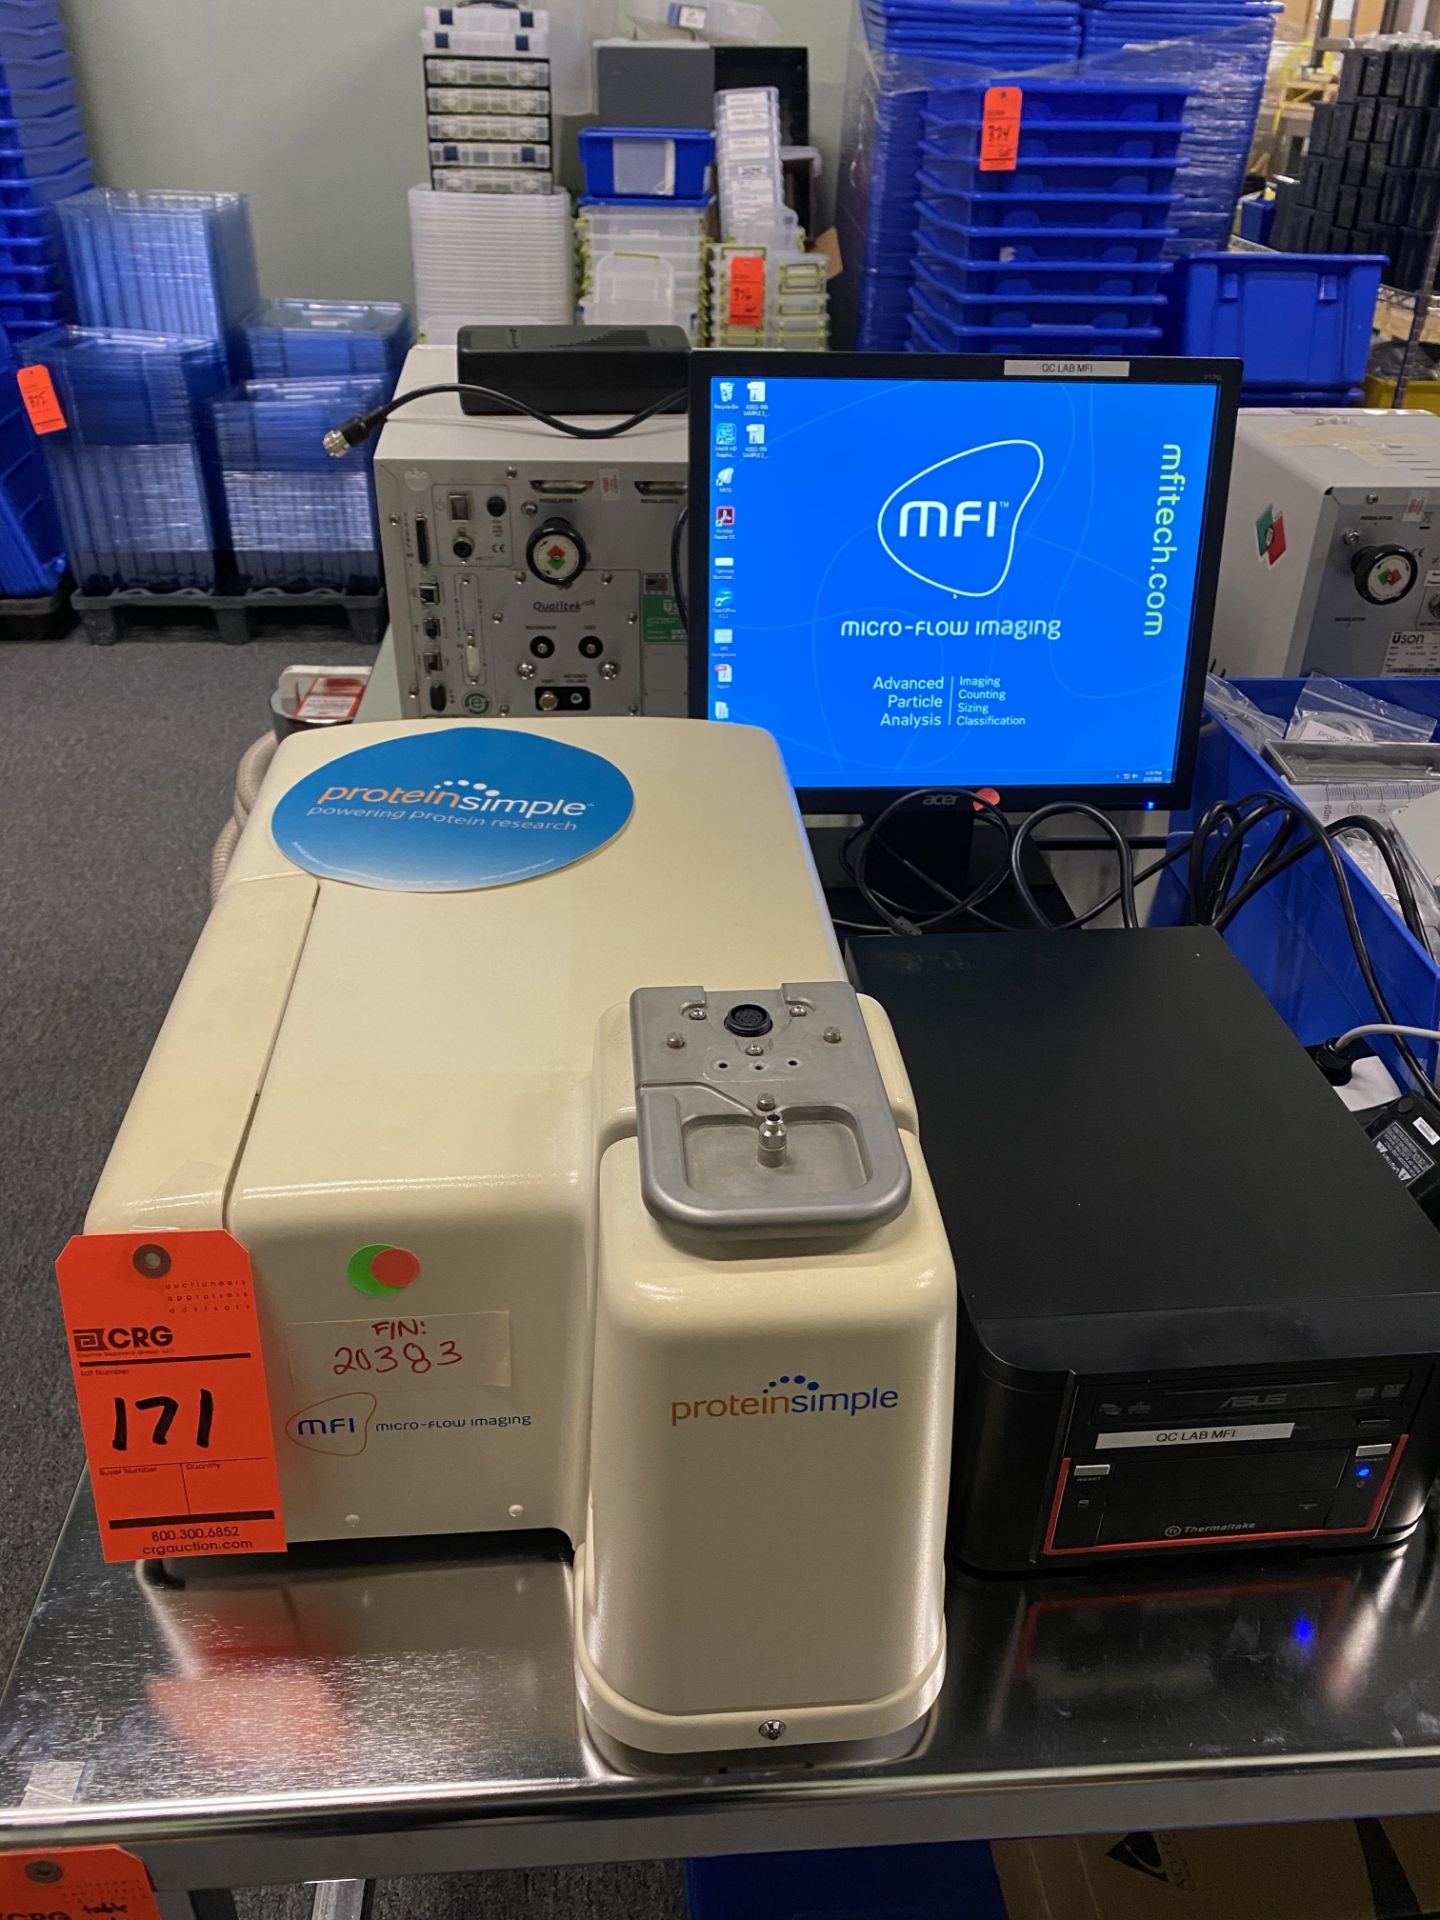 ProteinSimple MFI-5100 micro-flow imaging machine